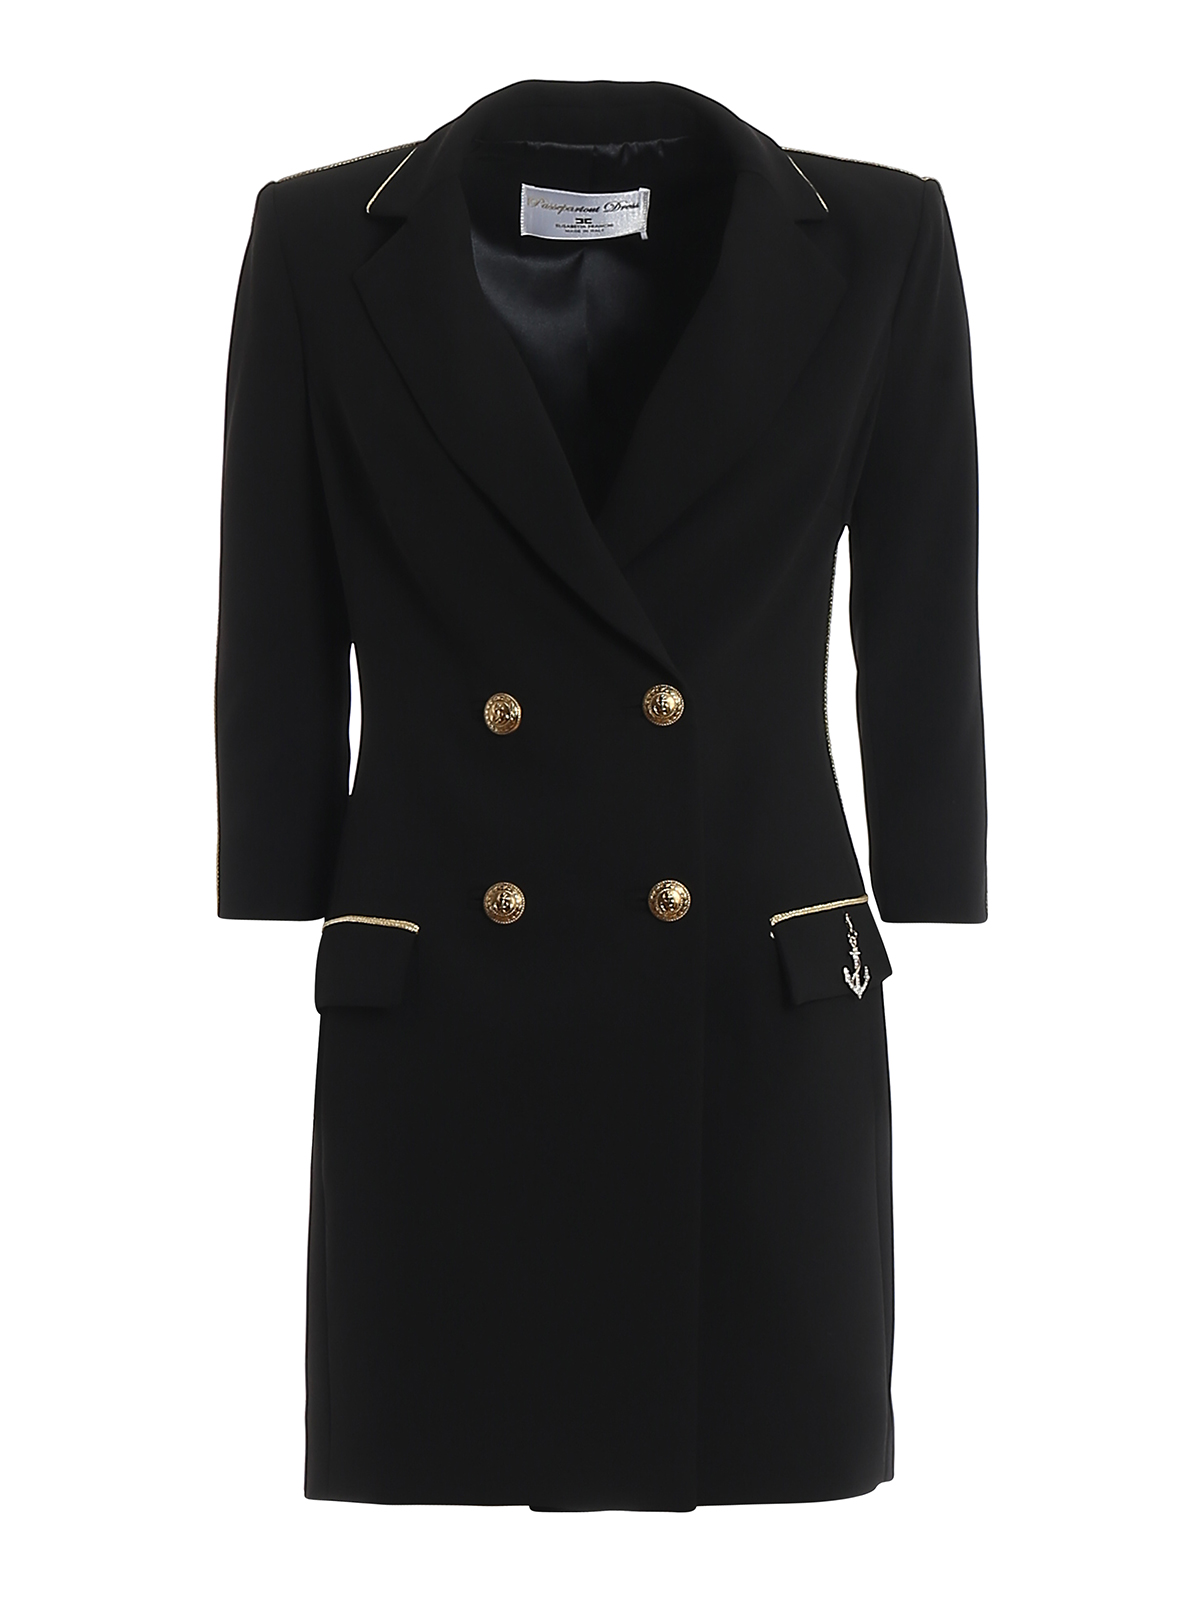 ELISABETTA FRANCHI DOUBLE-BREASTED BLACK COAT DRESS